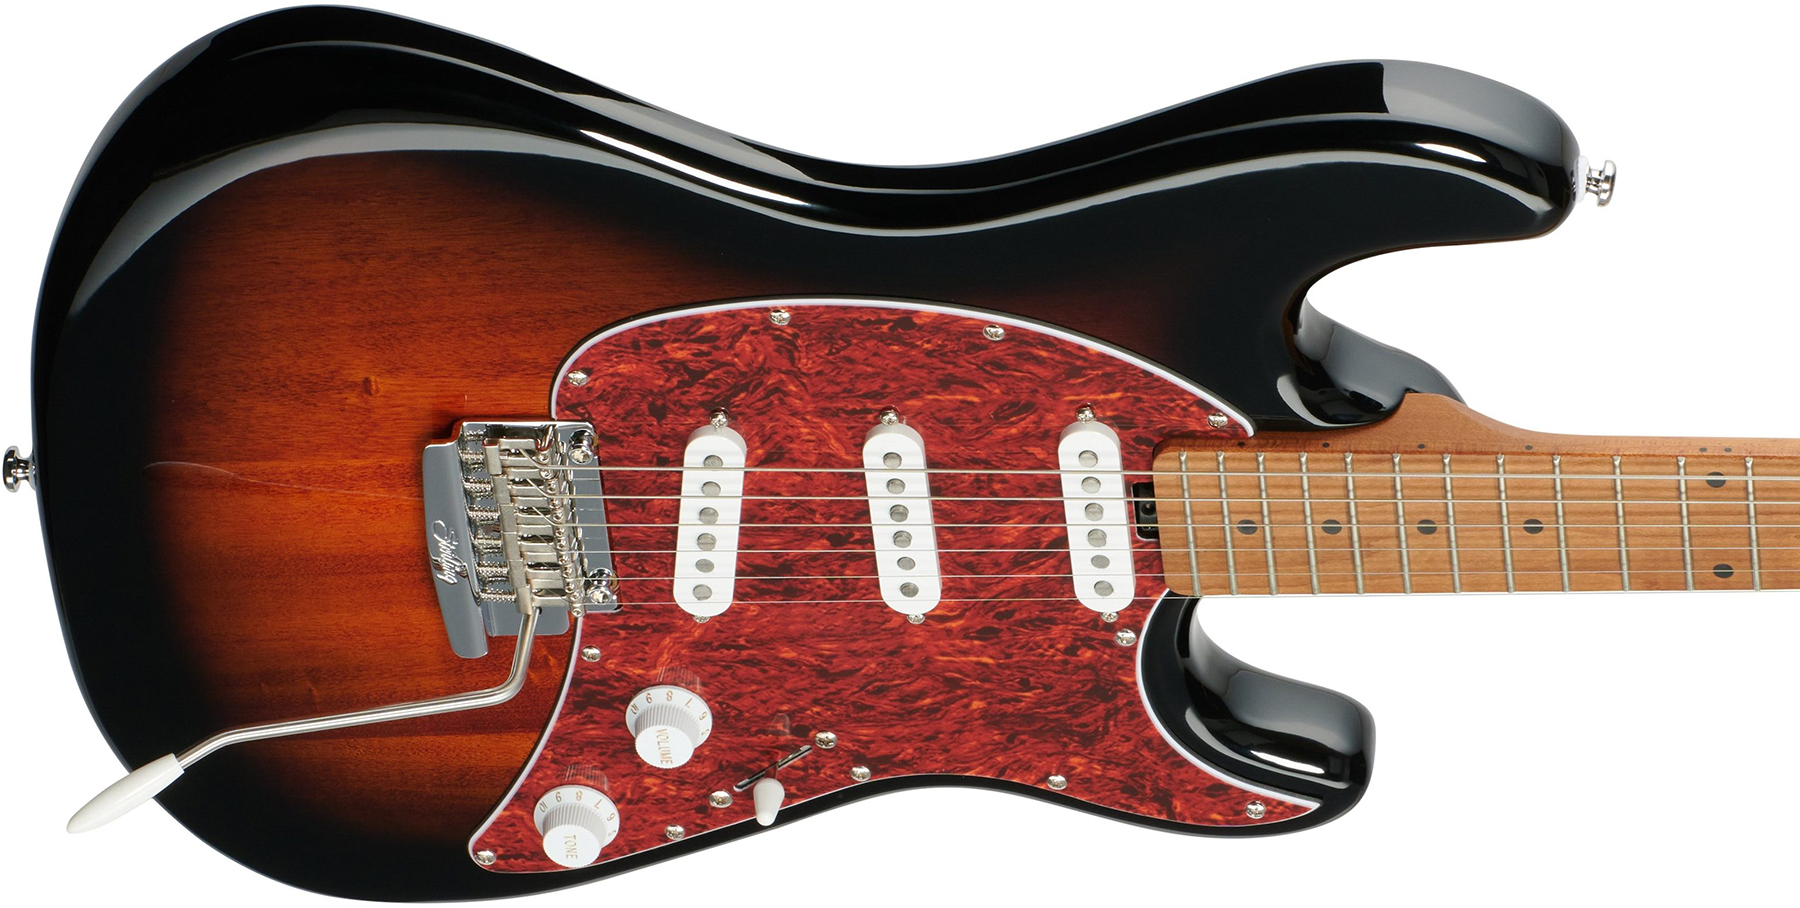 Sterling By Musicman Cutlass Ct50sss 3s Trem Mn - Vintage Sunburst - Str shape electric guitar - Variation 2